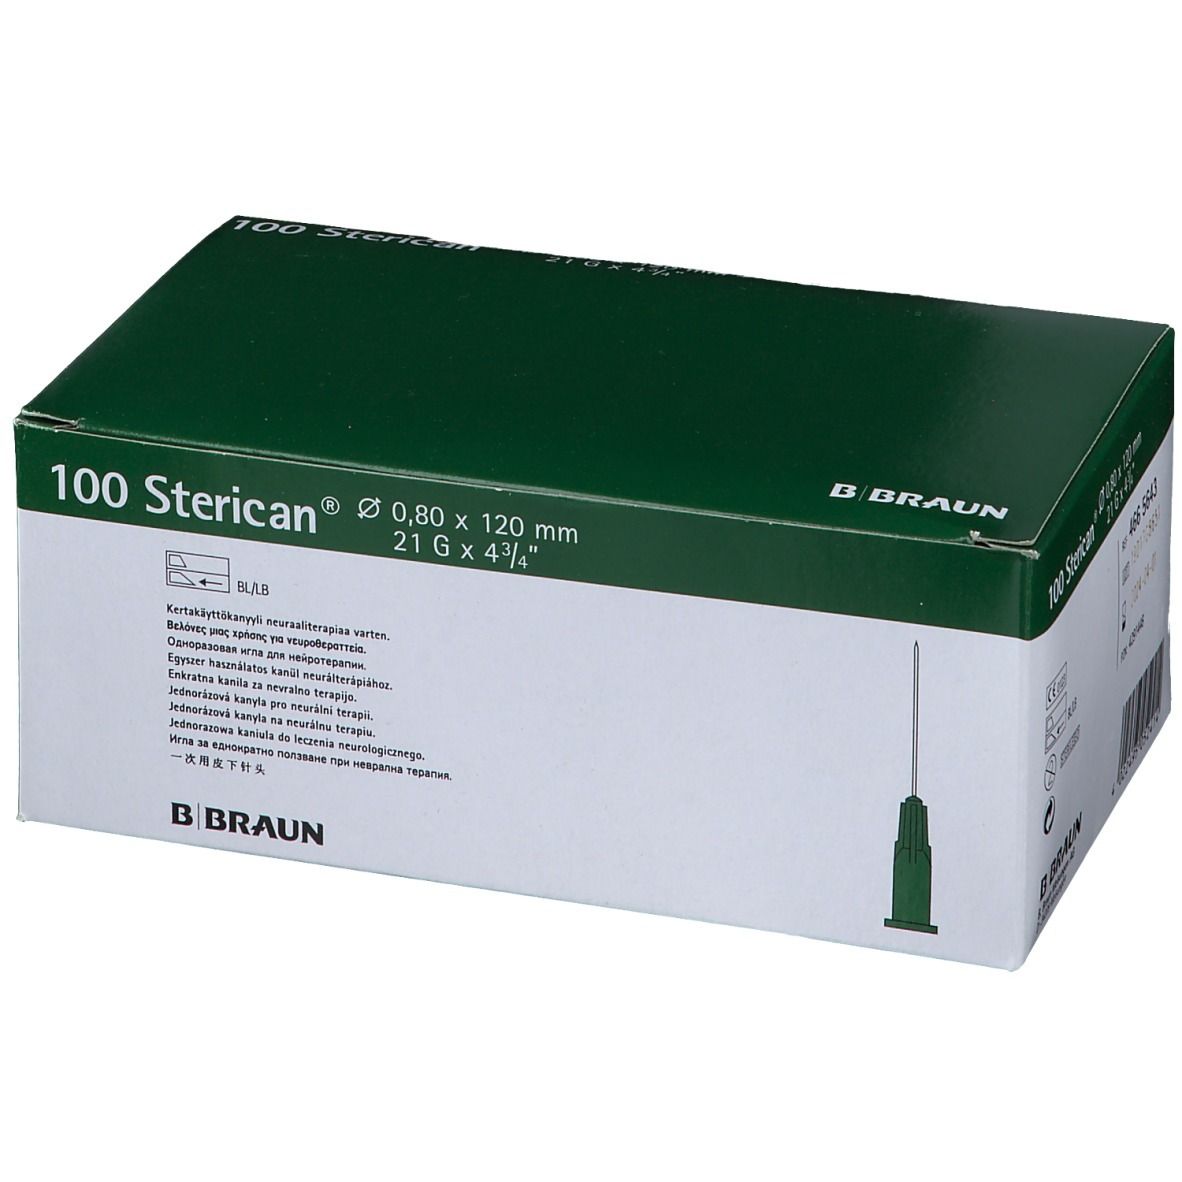 Sterican® zur Neuraltherapie G 21 4 3/4 0,80 x 120 mm